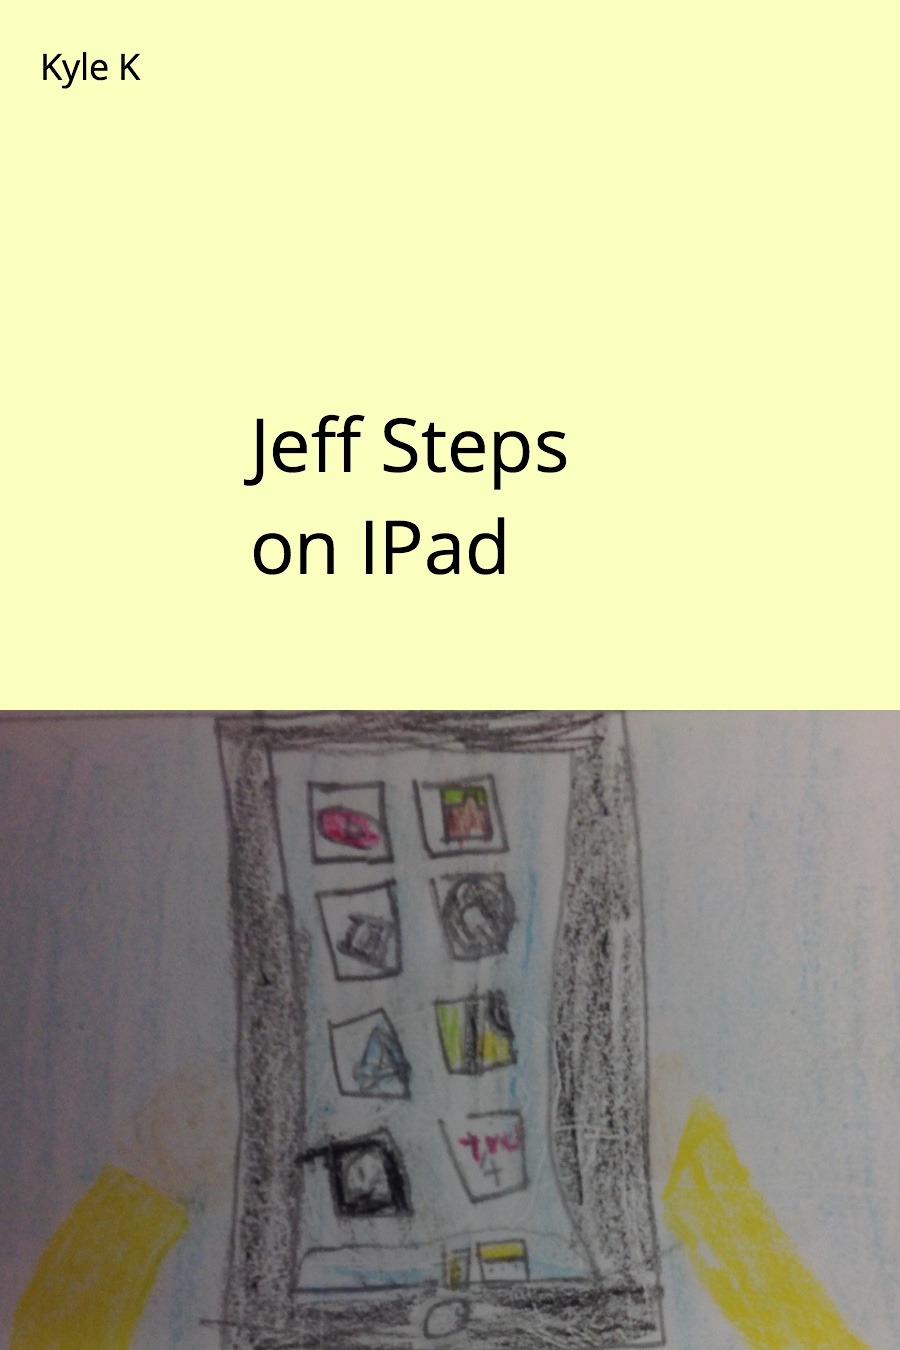 Jeff Steps on iPad by Kyle K